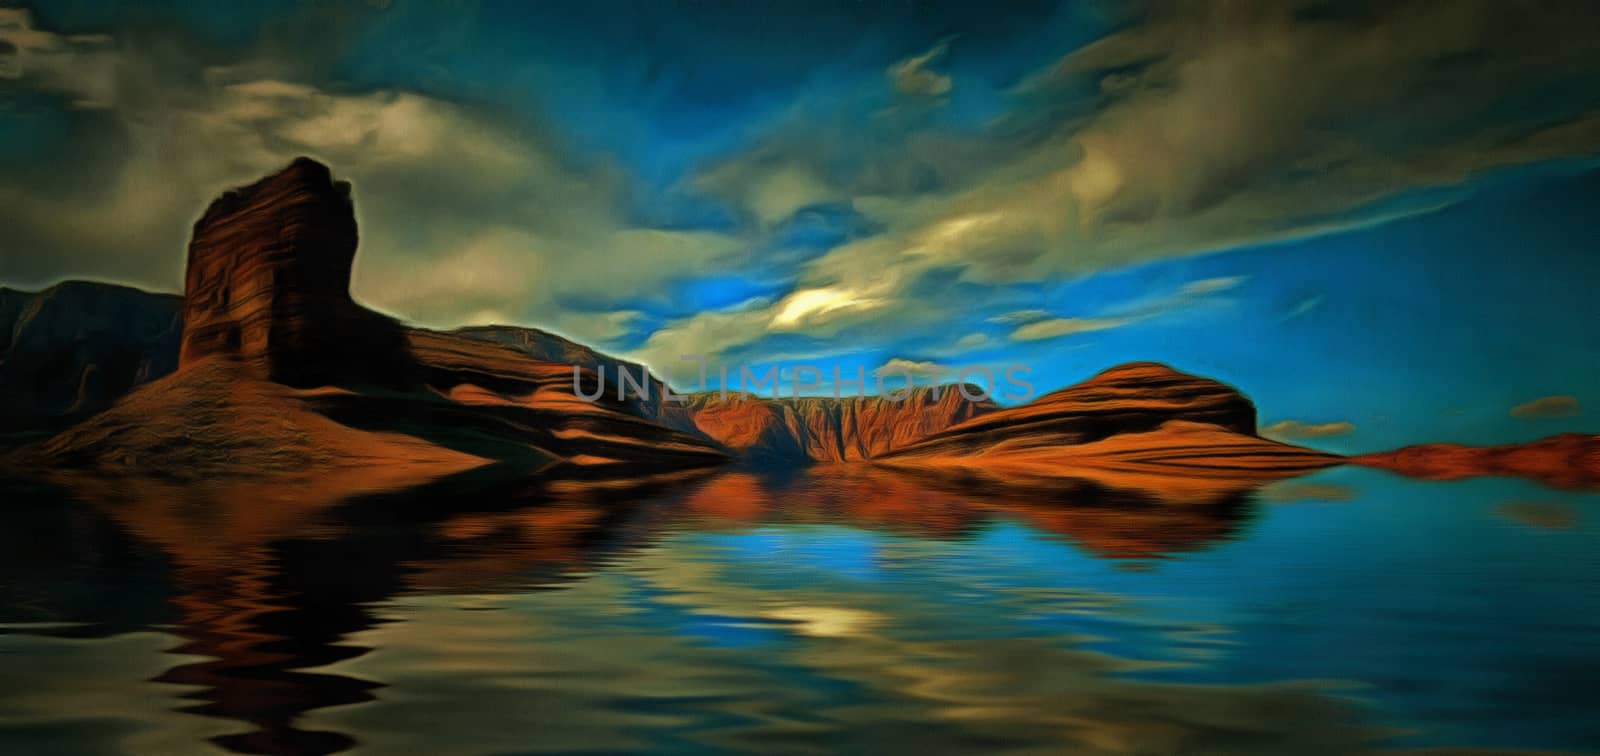 Desert Water Landscape by applesstock